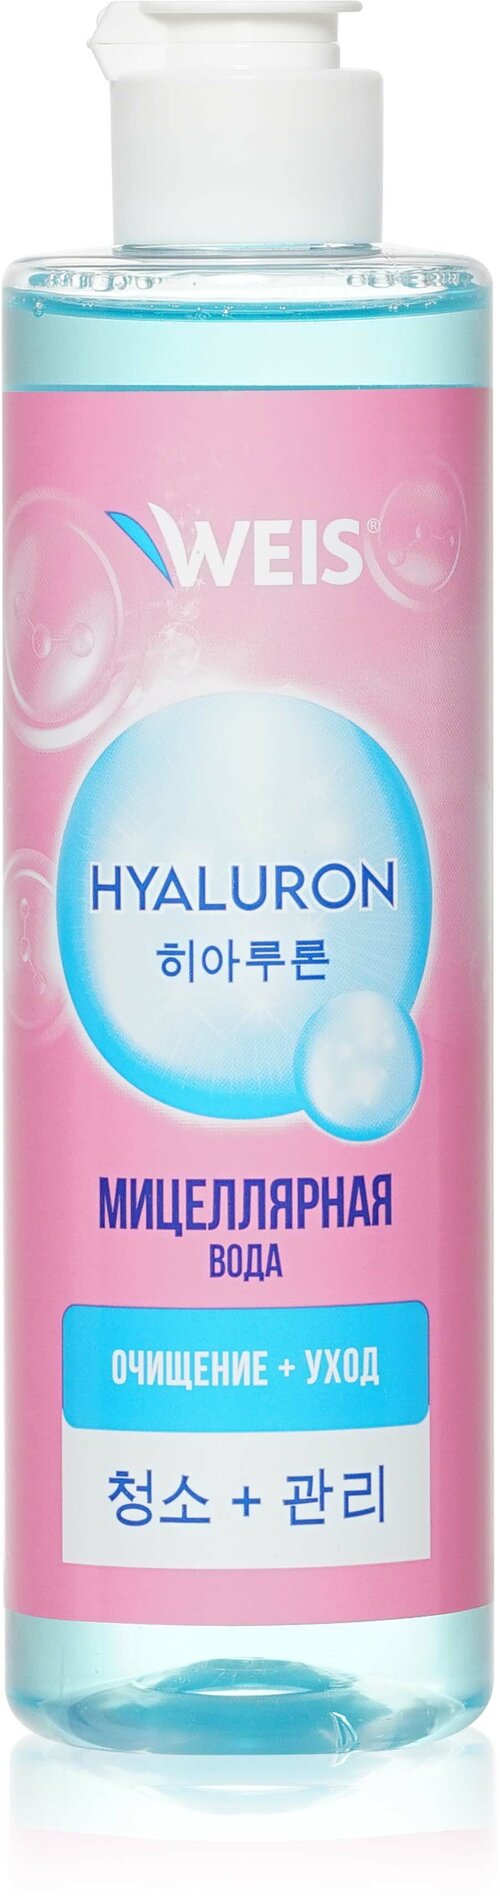 Мицеллярная вода WEIS Hyaluron для снятия макияжа, 250 мл.